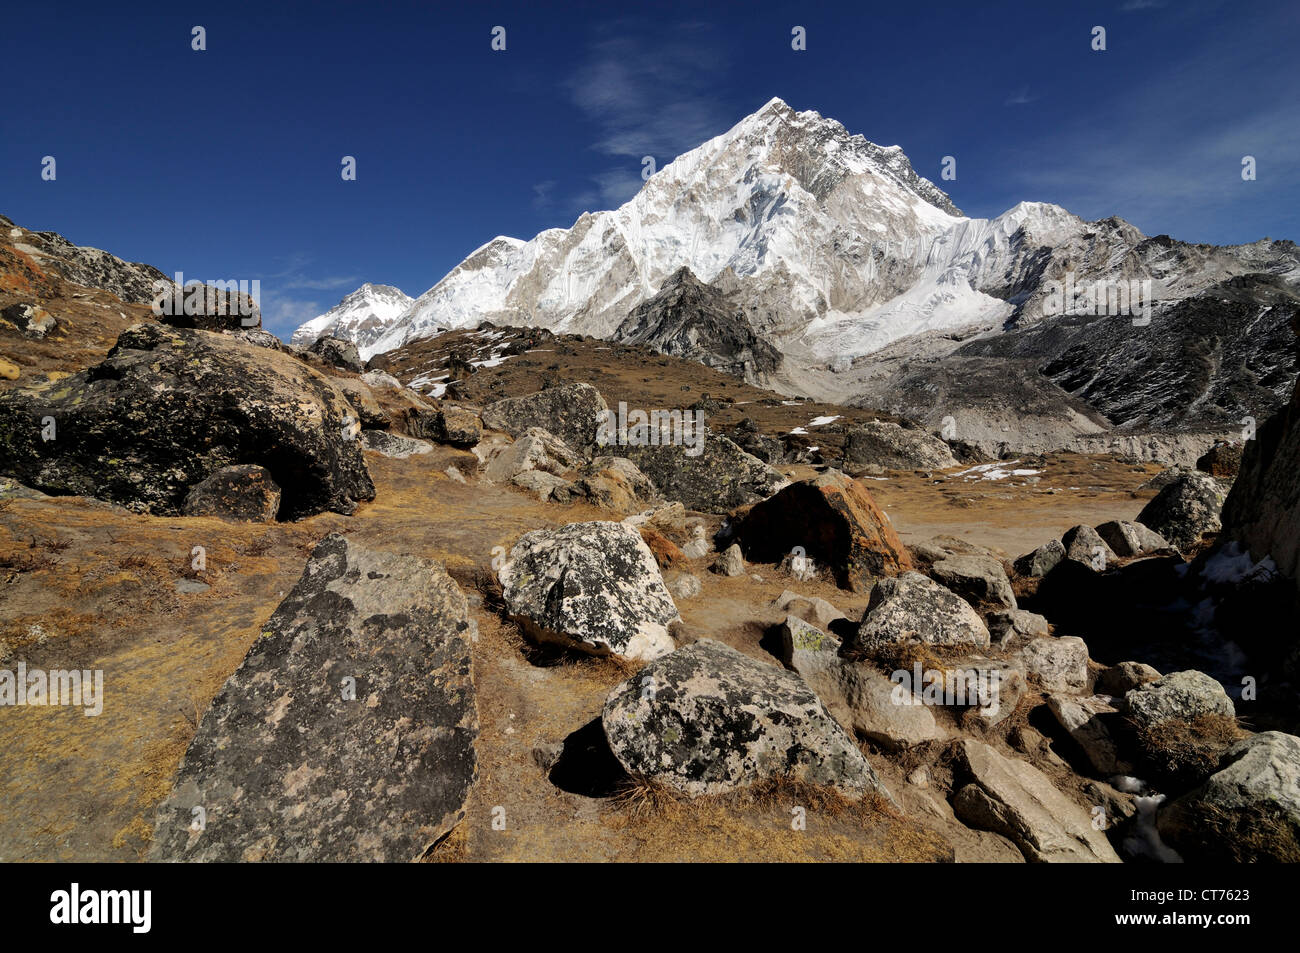 Nepal mountain landscape Stock Photo